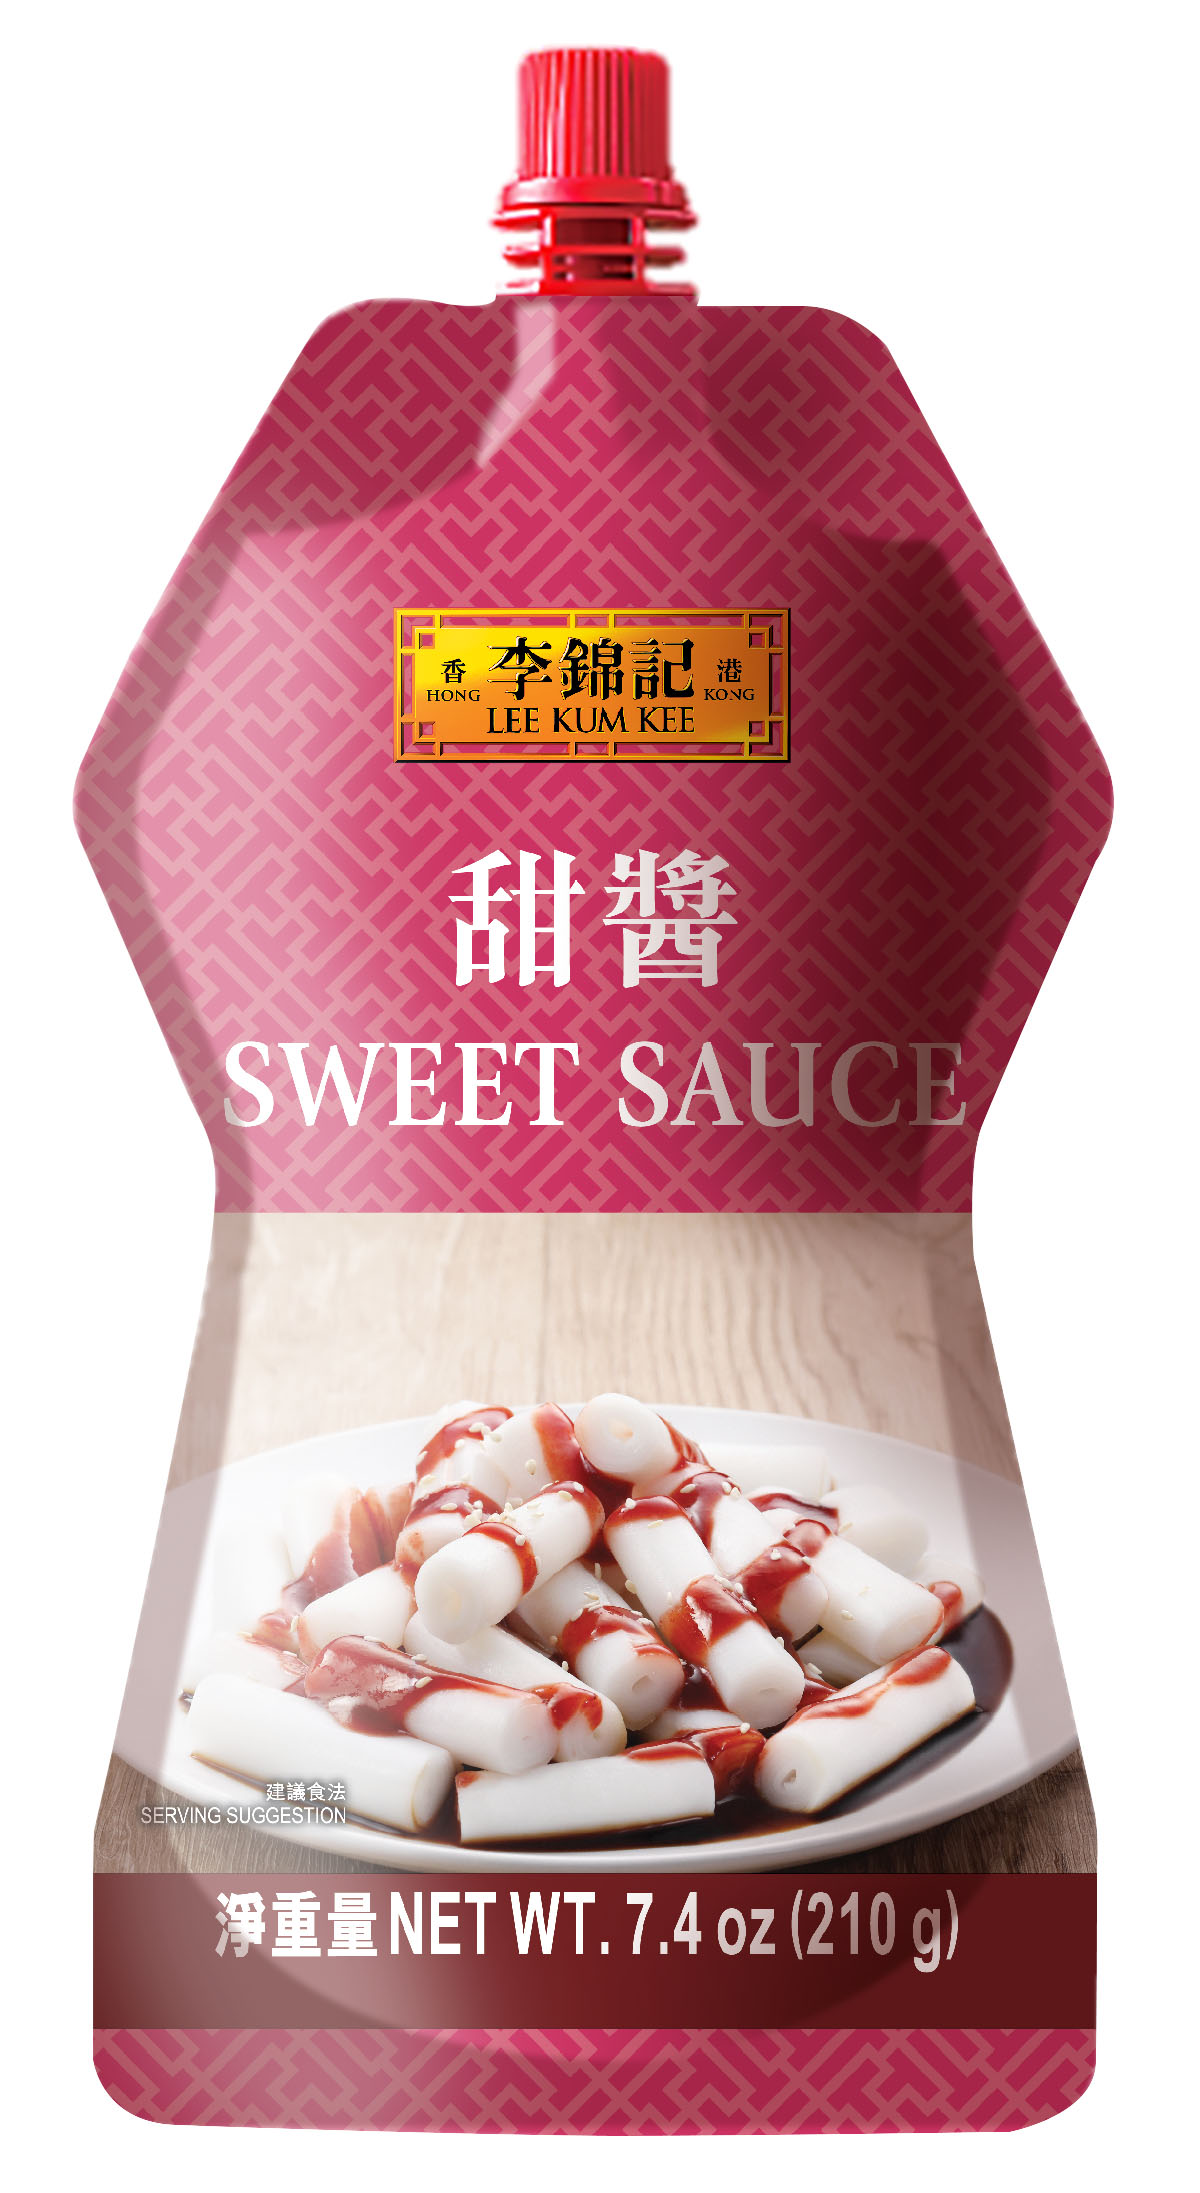 Sweet Sauce, Lee Kum Kee, Home